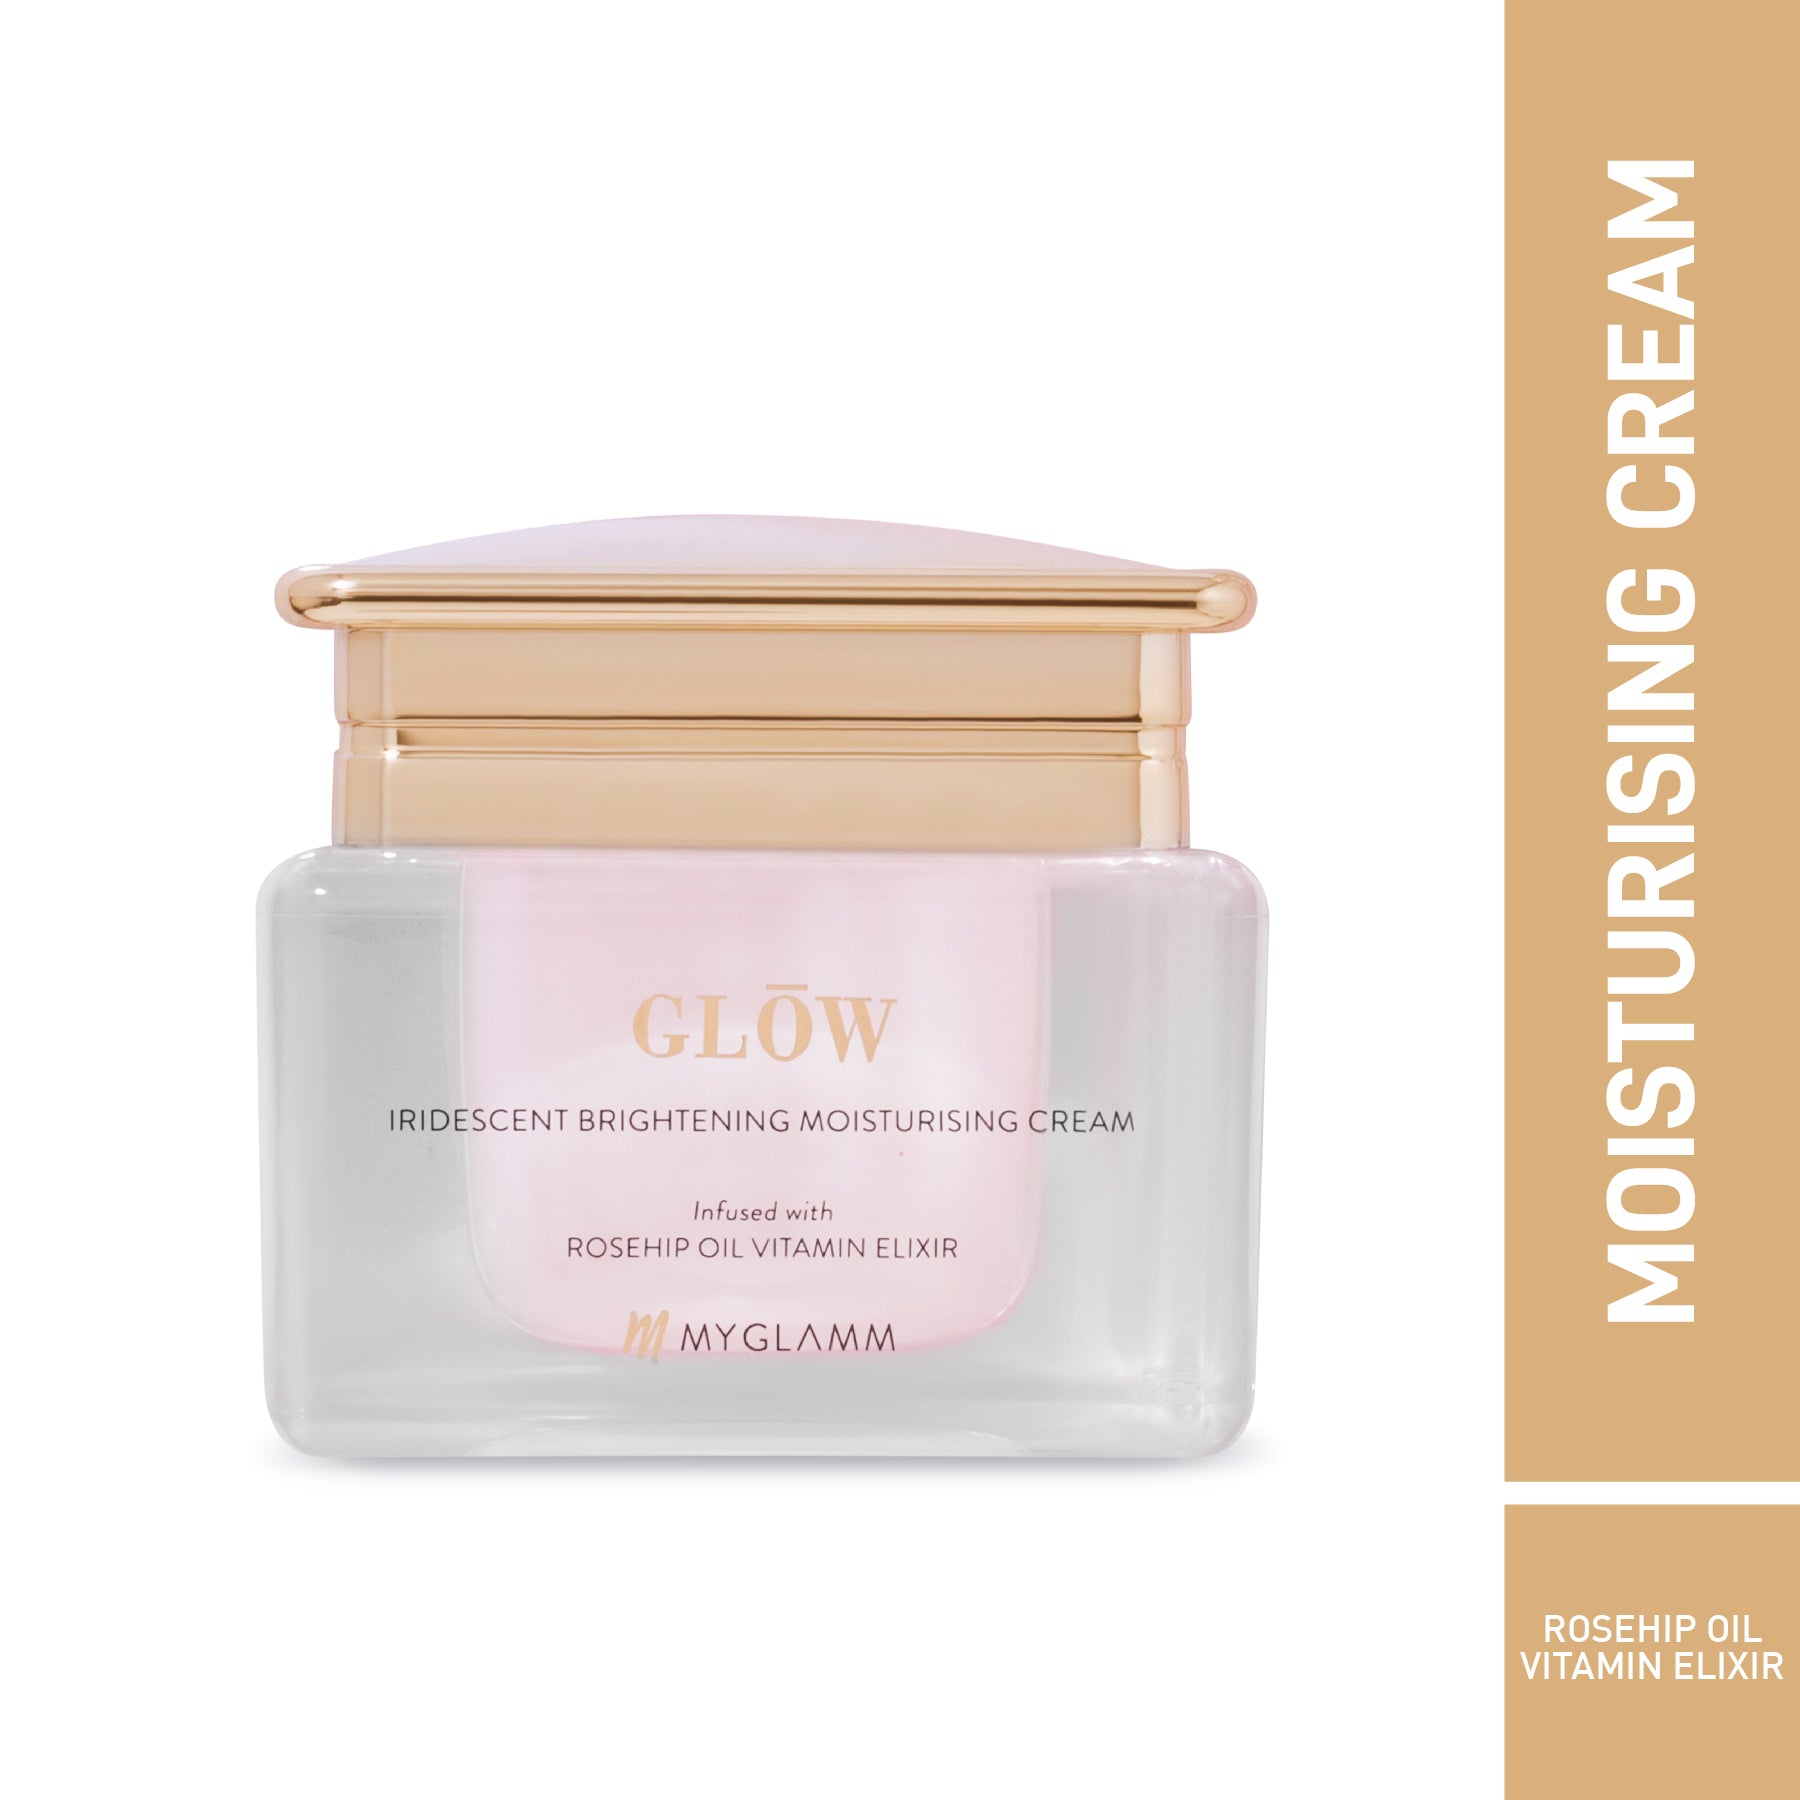 MyGlamm GLOW Iridescent Brightening Moisturising Cream-50ml